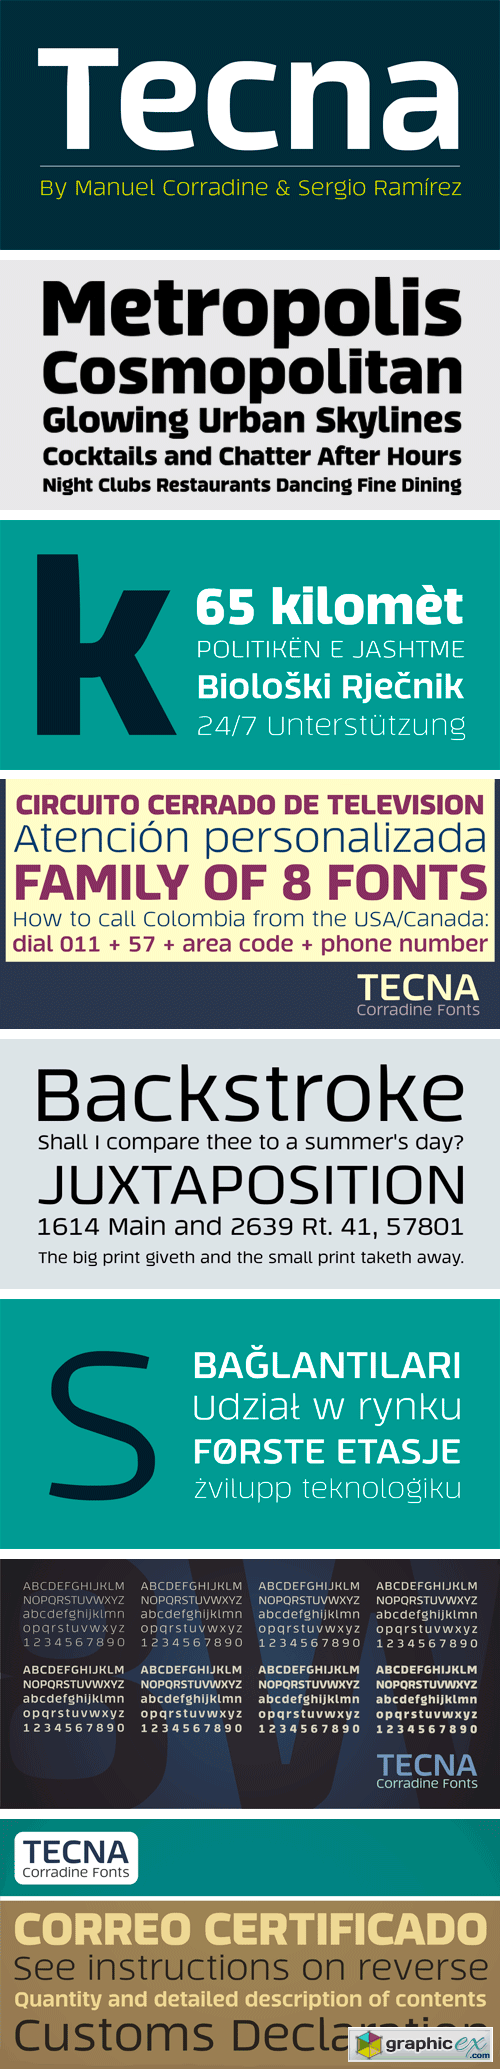 Tecna Font Family - 8 Fonts for $100